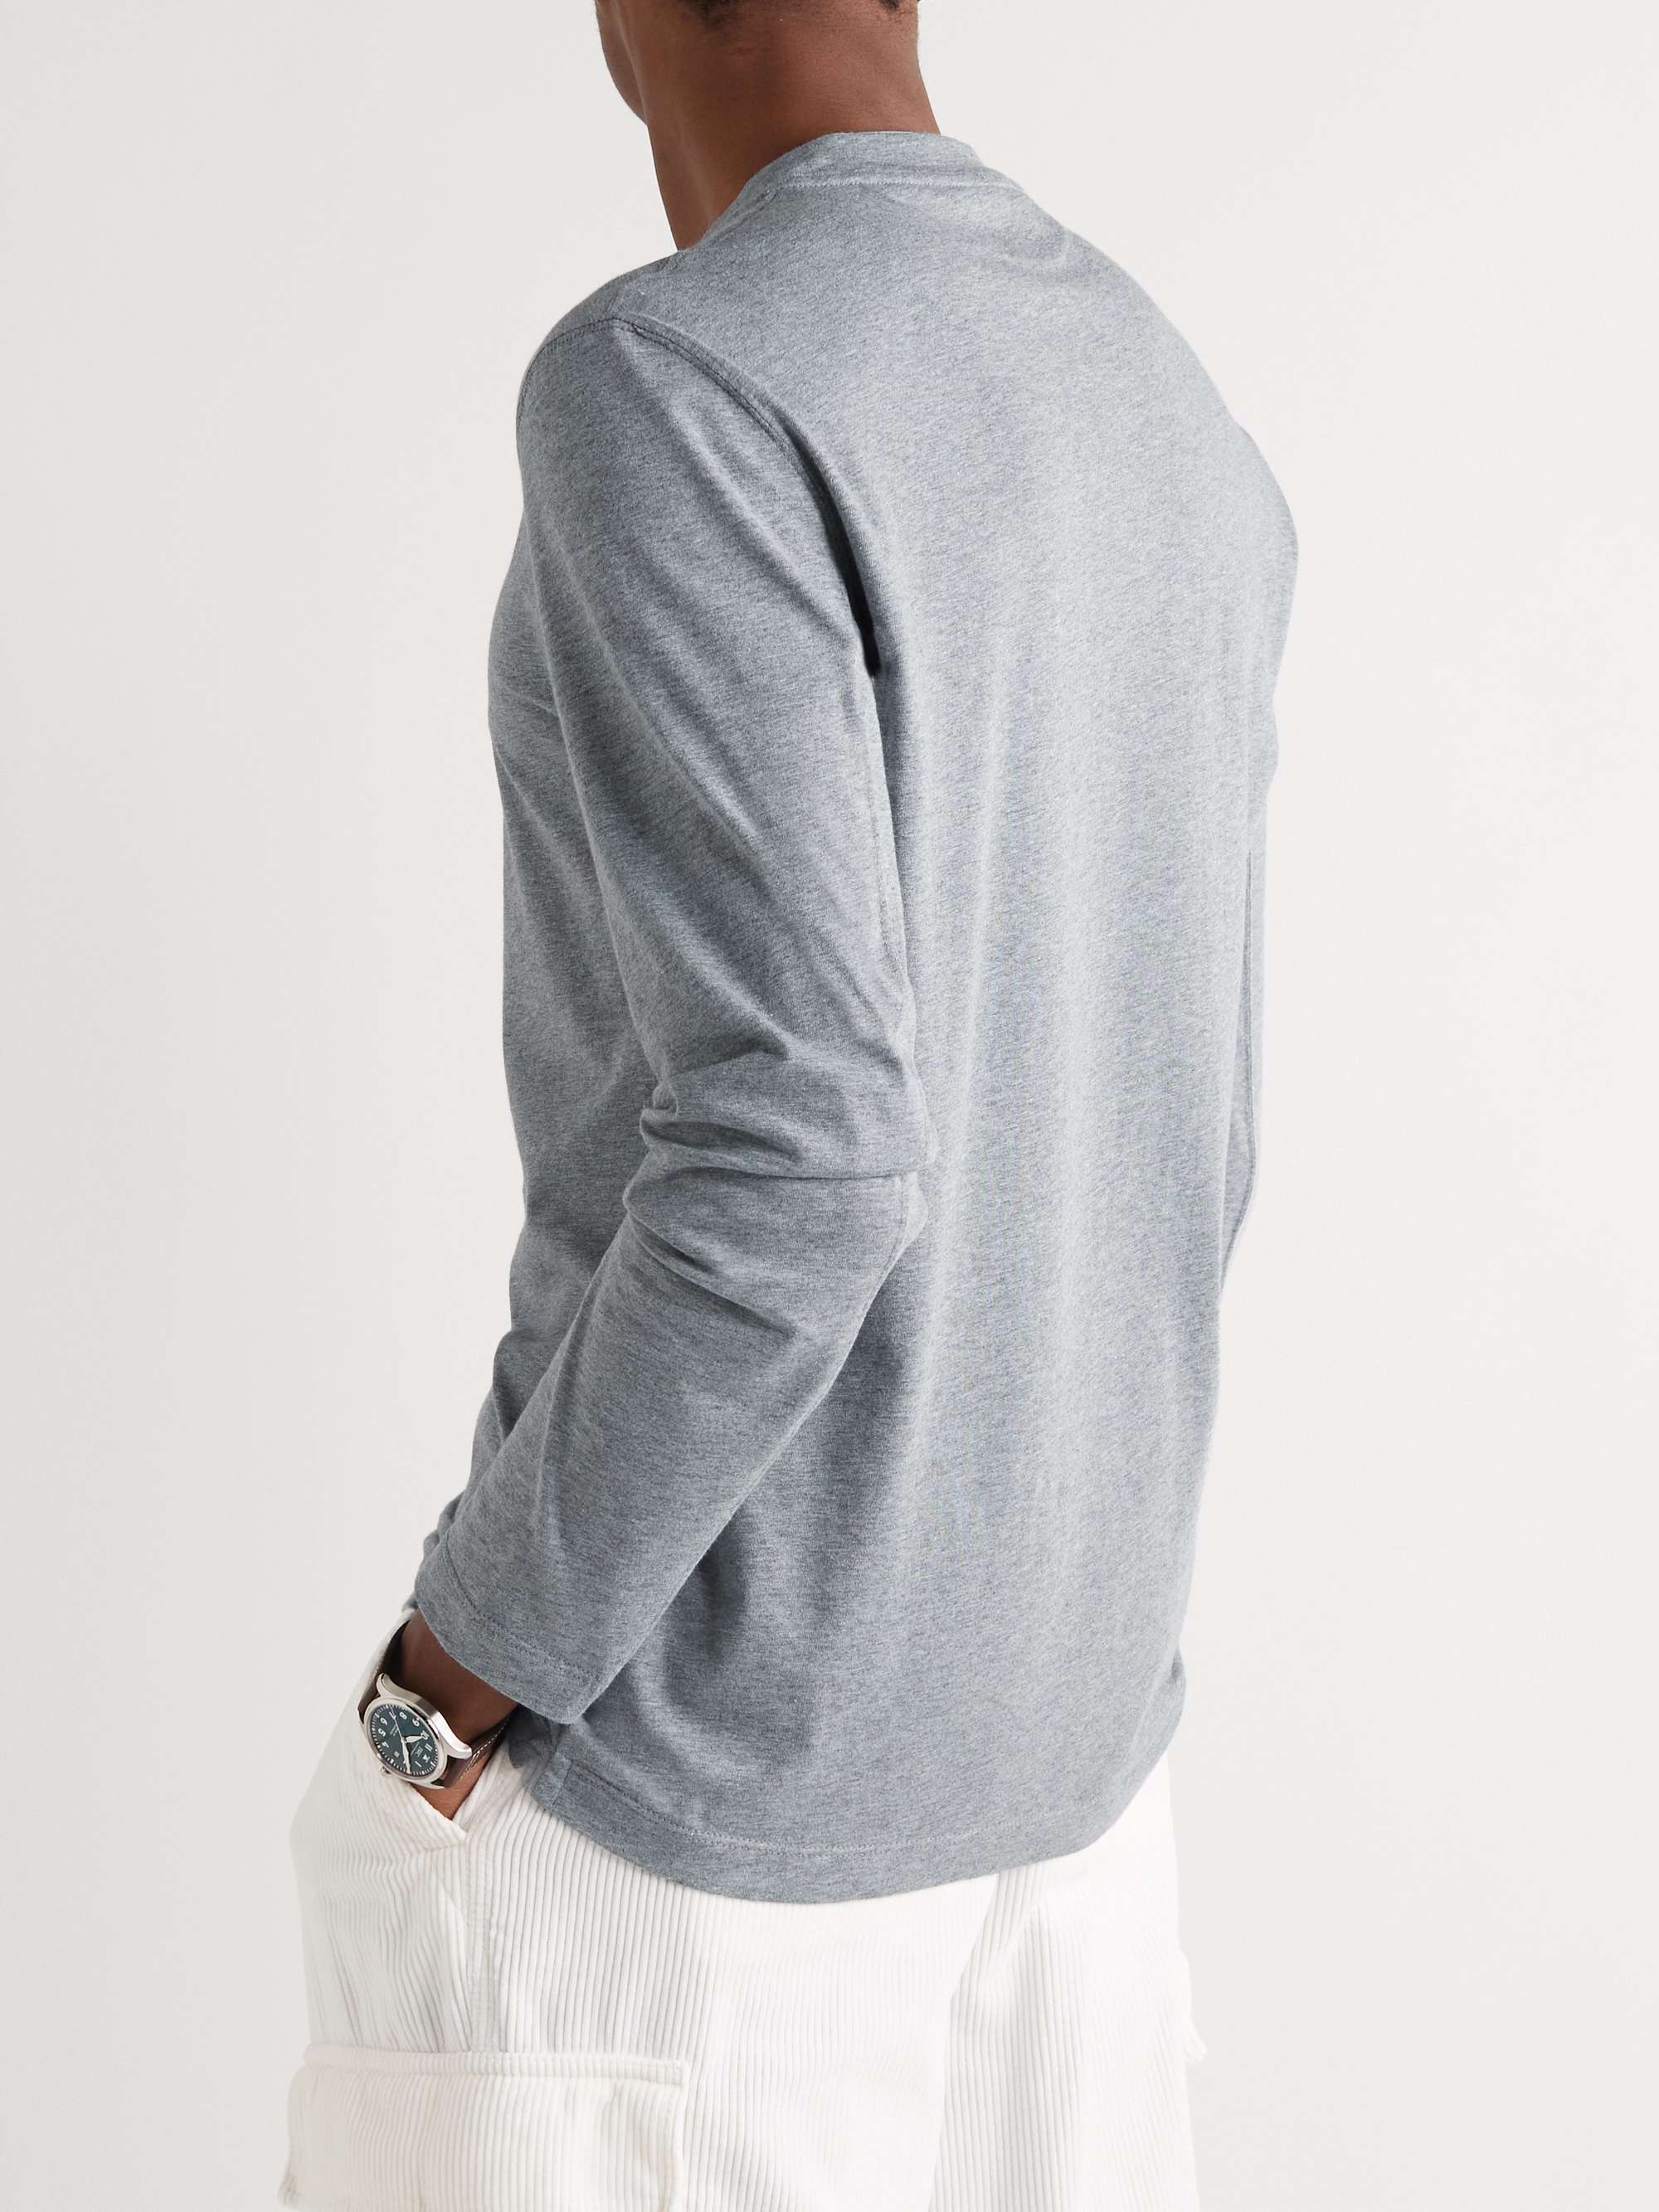 BRUNELLO CUCINELLI Layered Cotton-Jersey T-Shirt